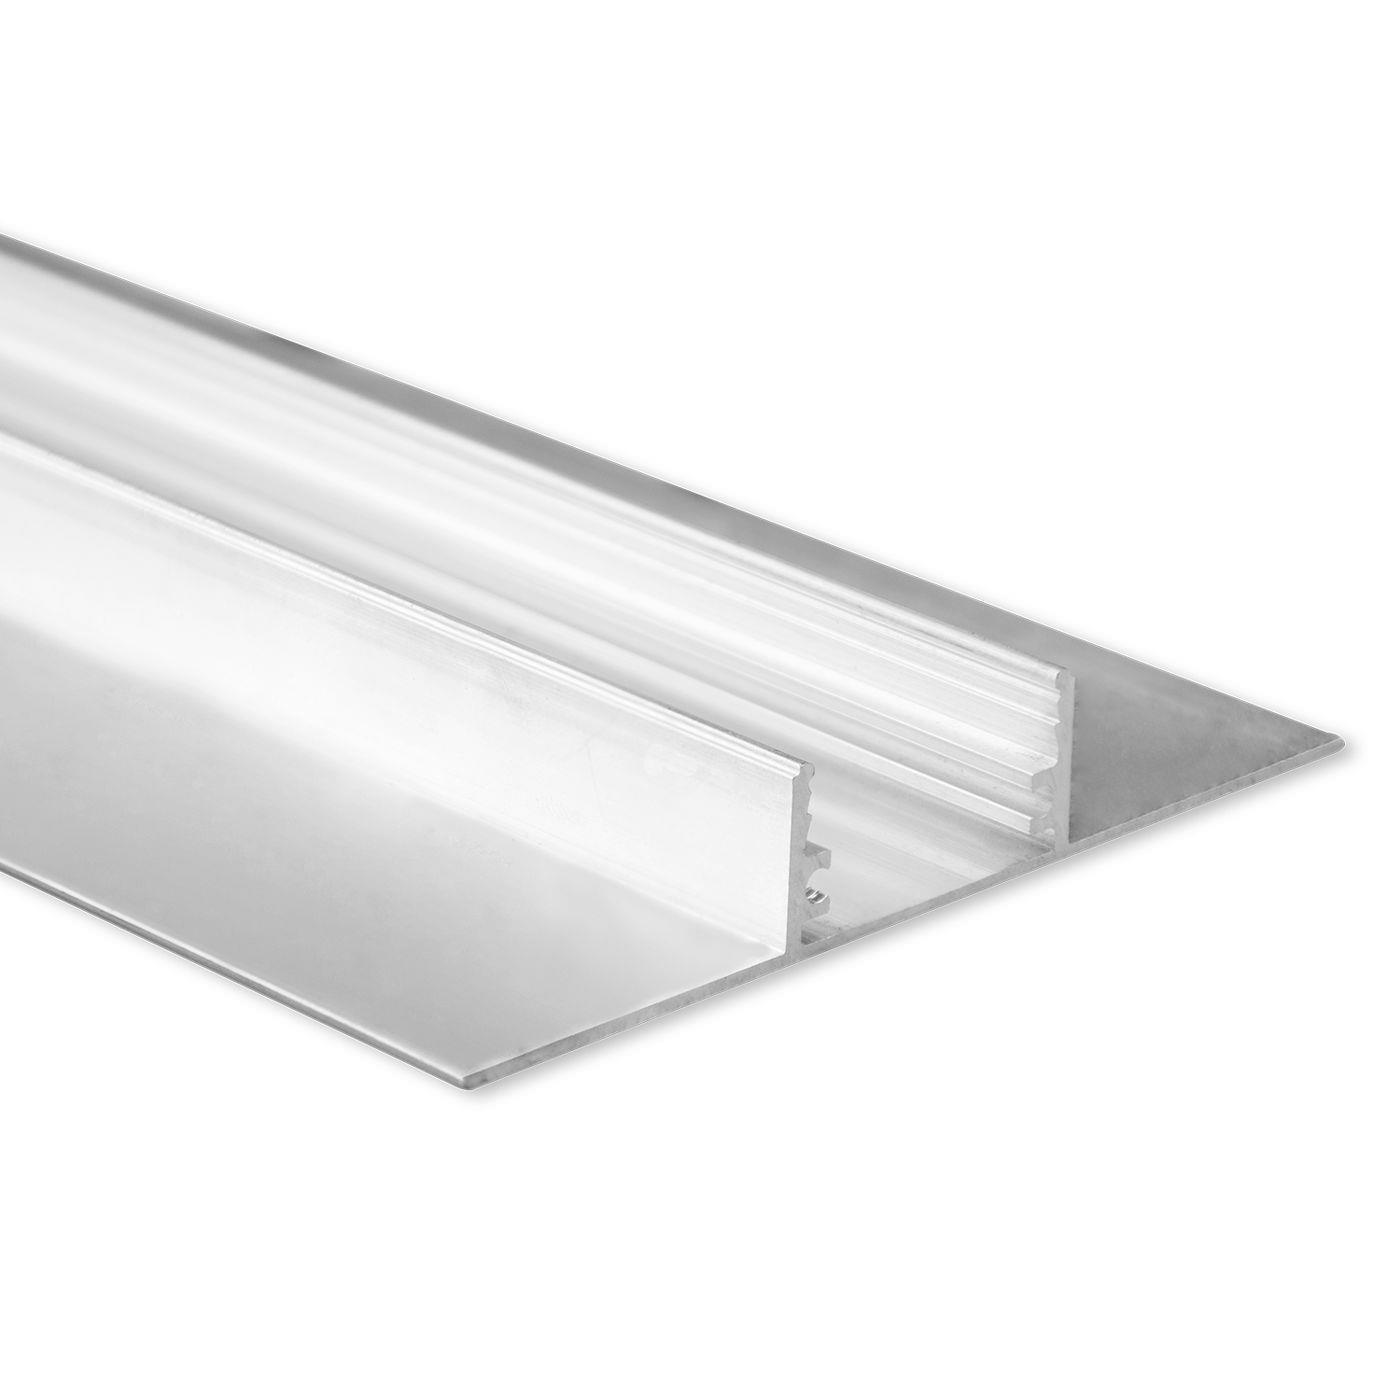 2m LED Profil TBP5 Silber 87,3x14,4mm Aluminium Trockenbauprofil für 20mm LED Streifen